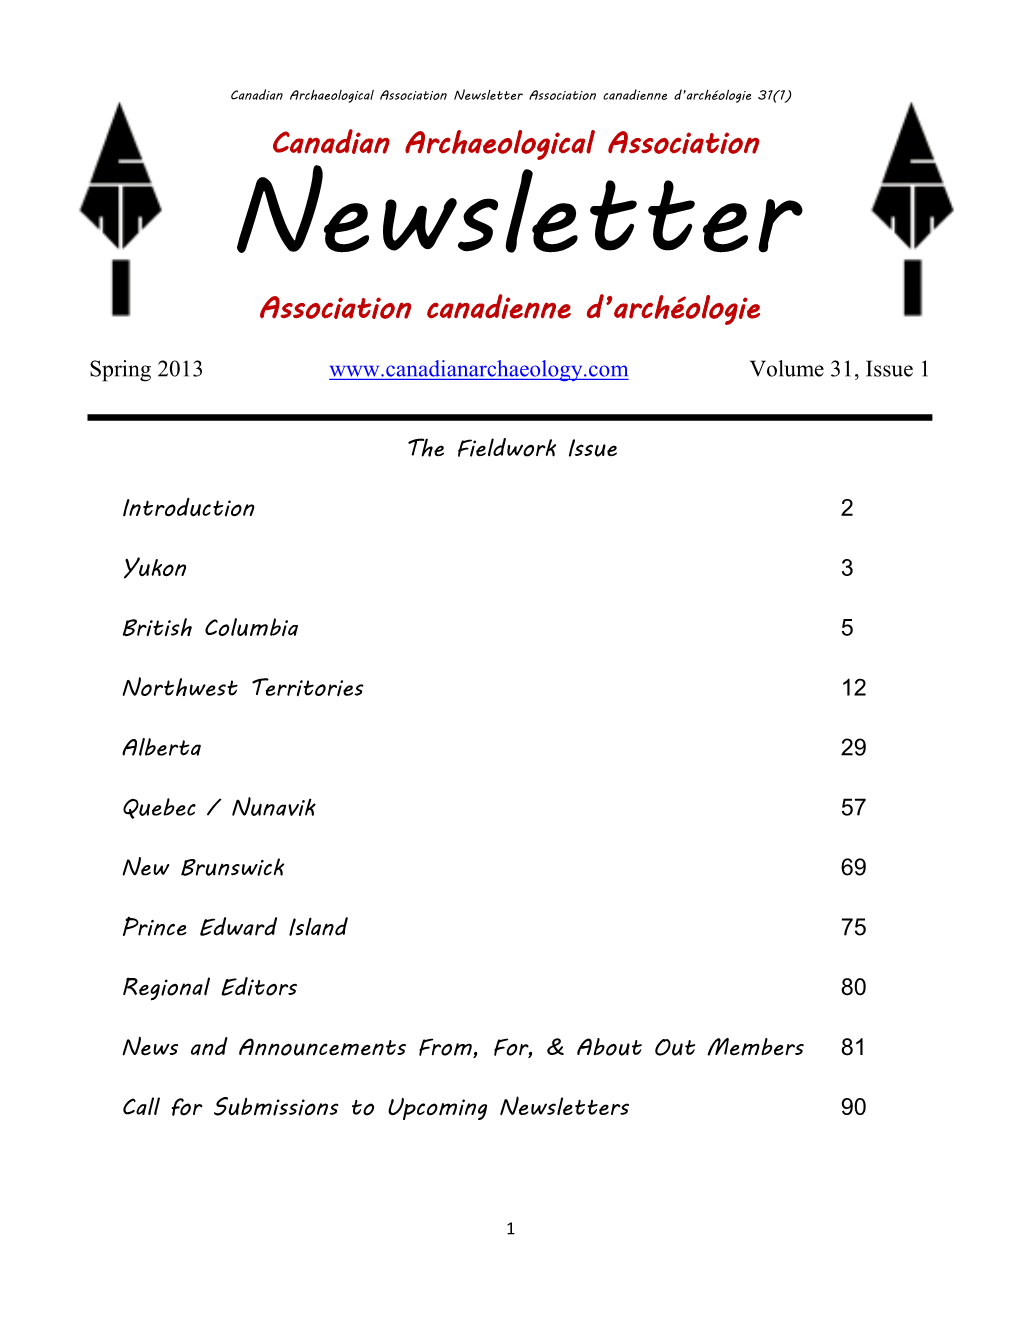 Newsletter Association Canadienne D’Archéologie 31(1)